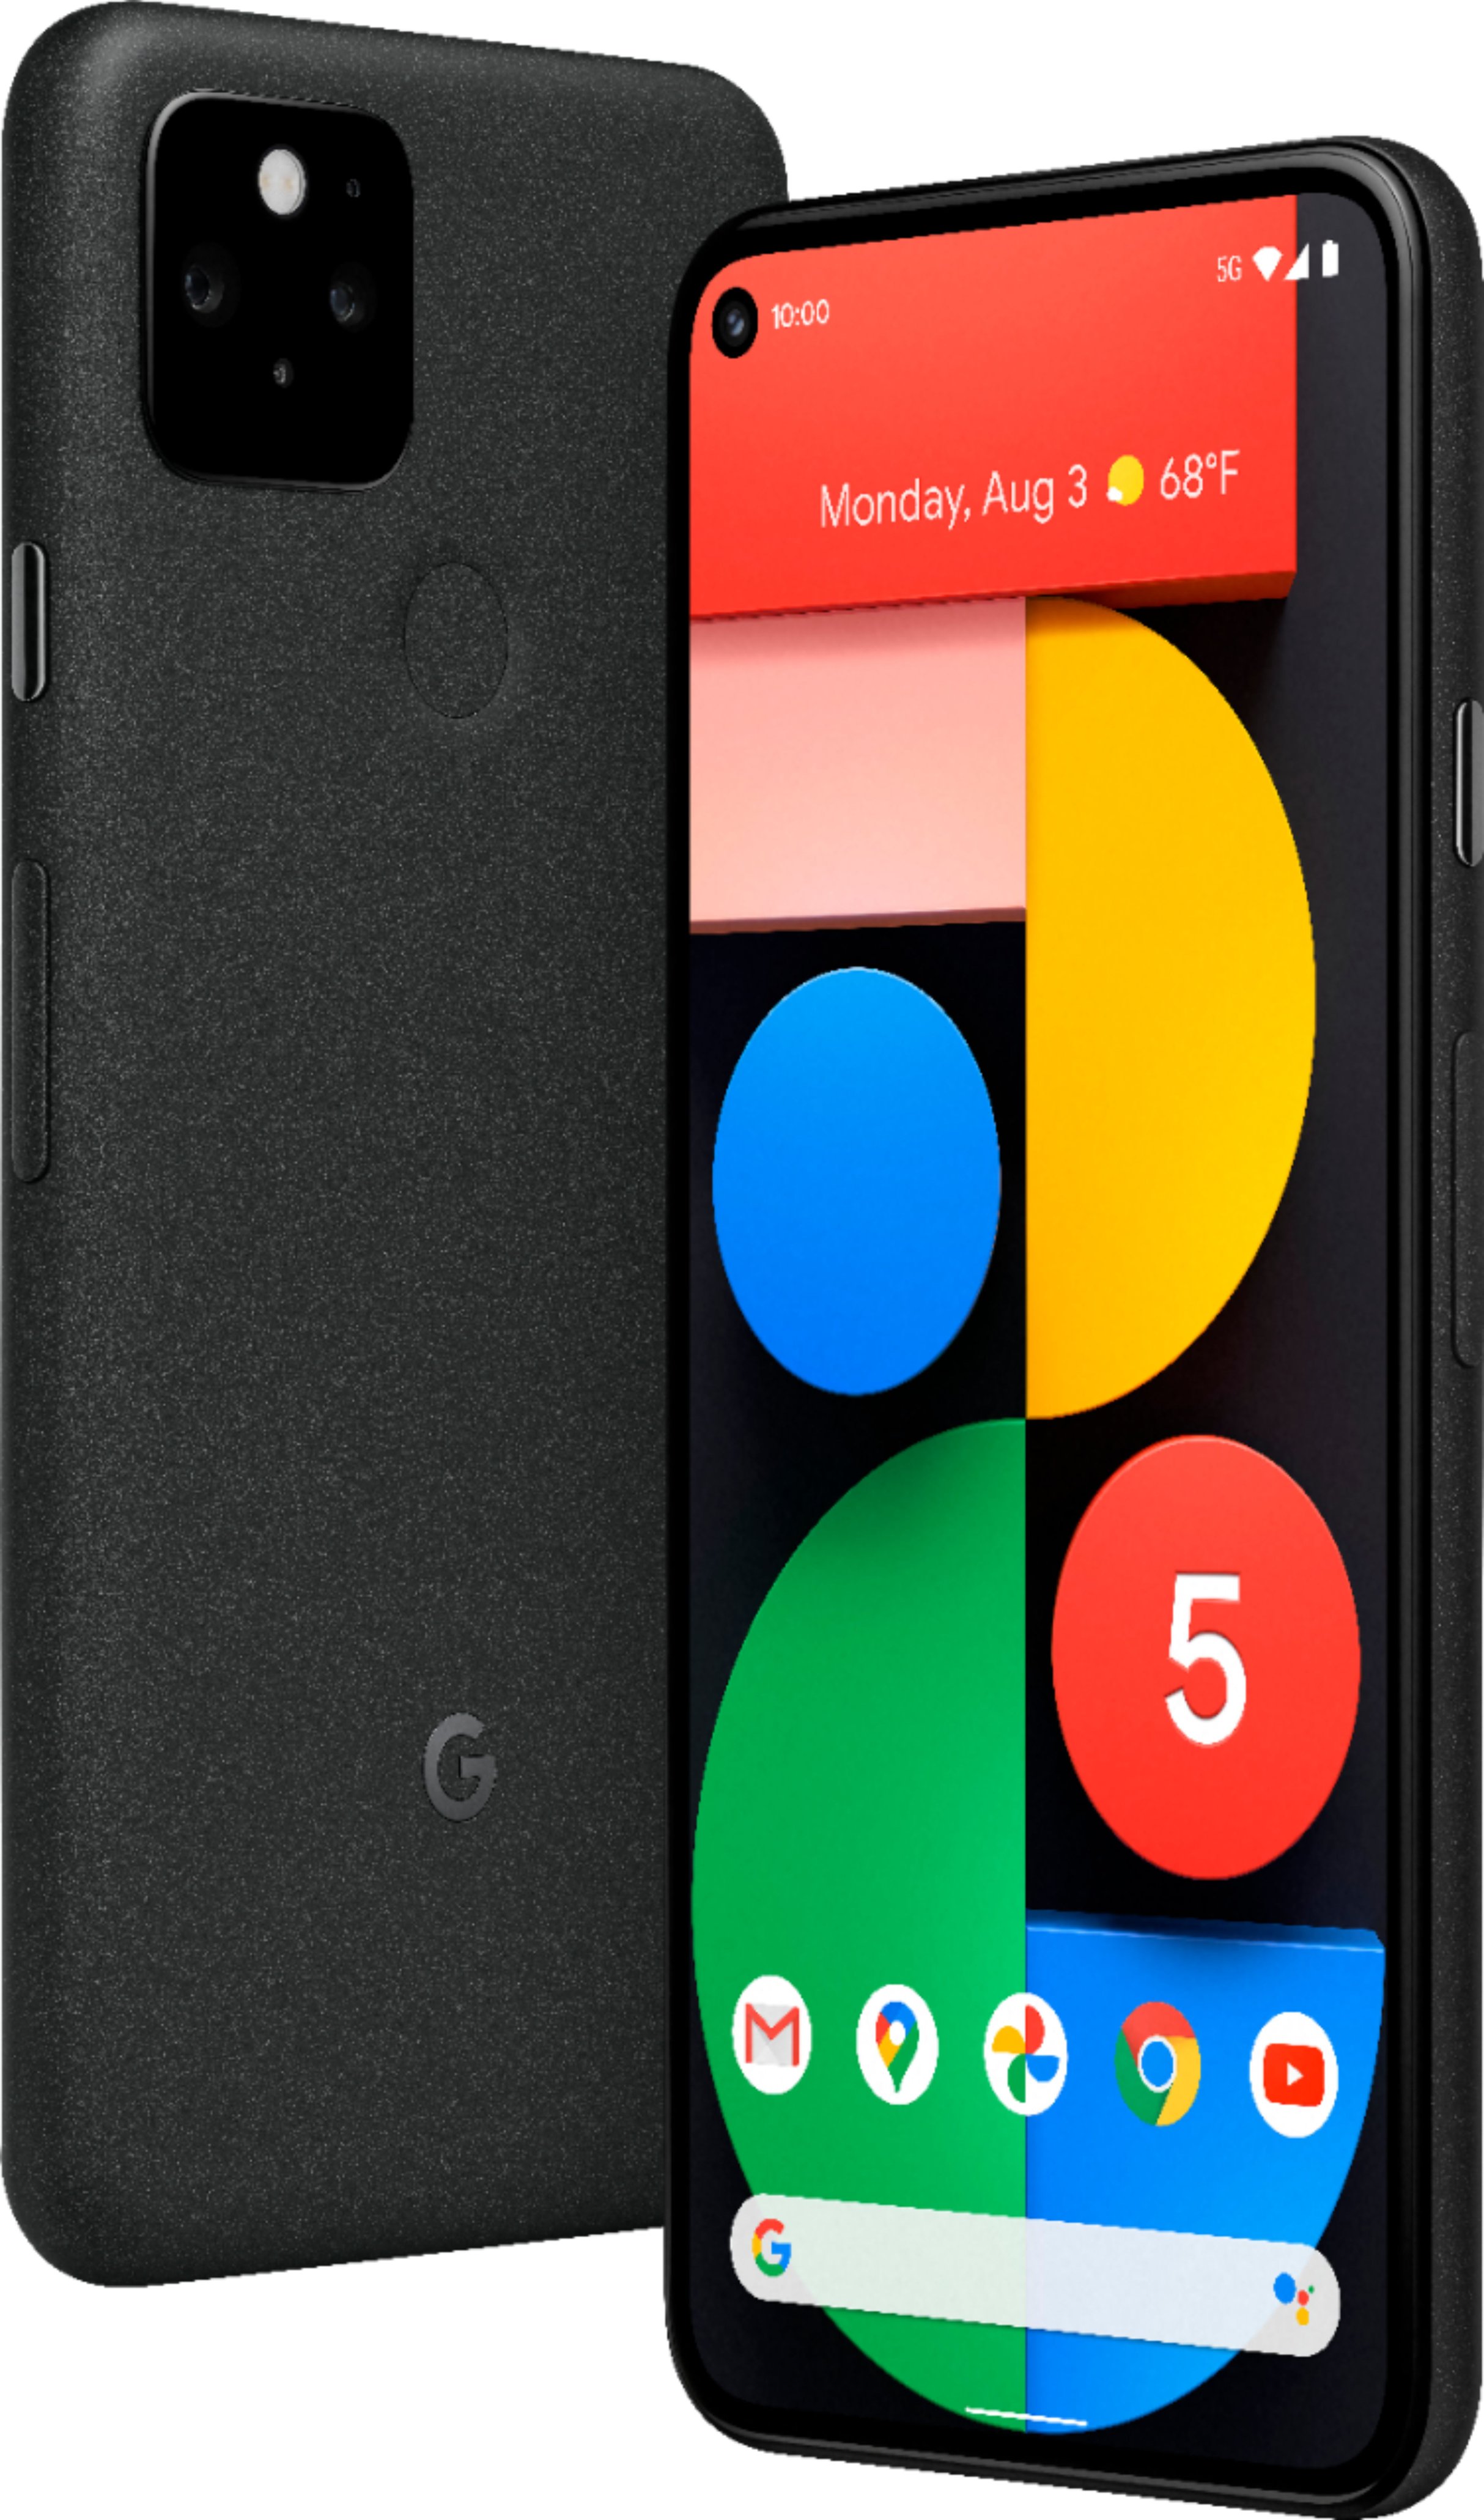 Google Pixel 3 XL 128gb White Unlocked Fast LOOK for sale online 